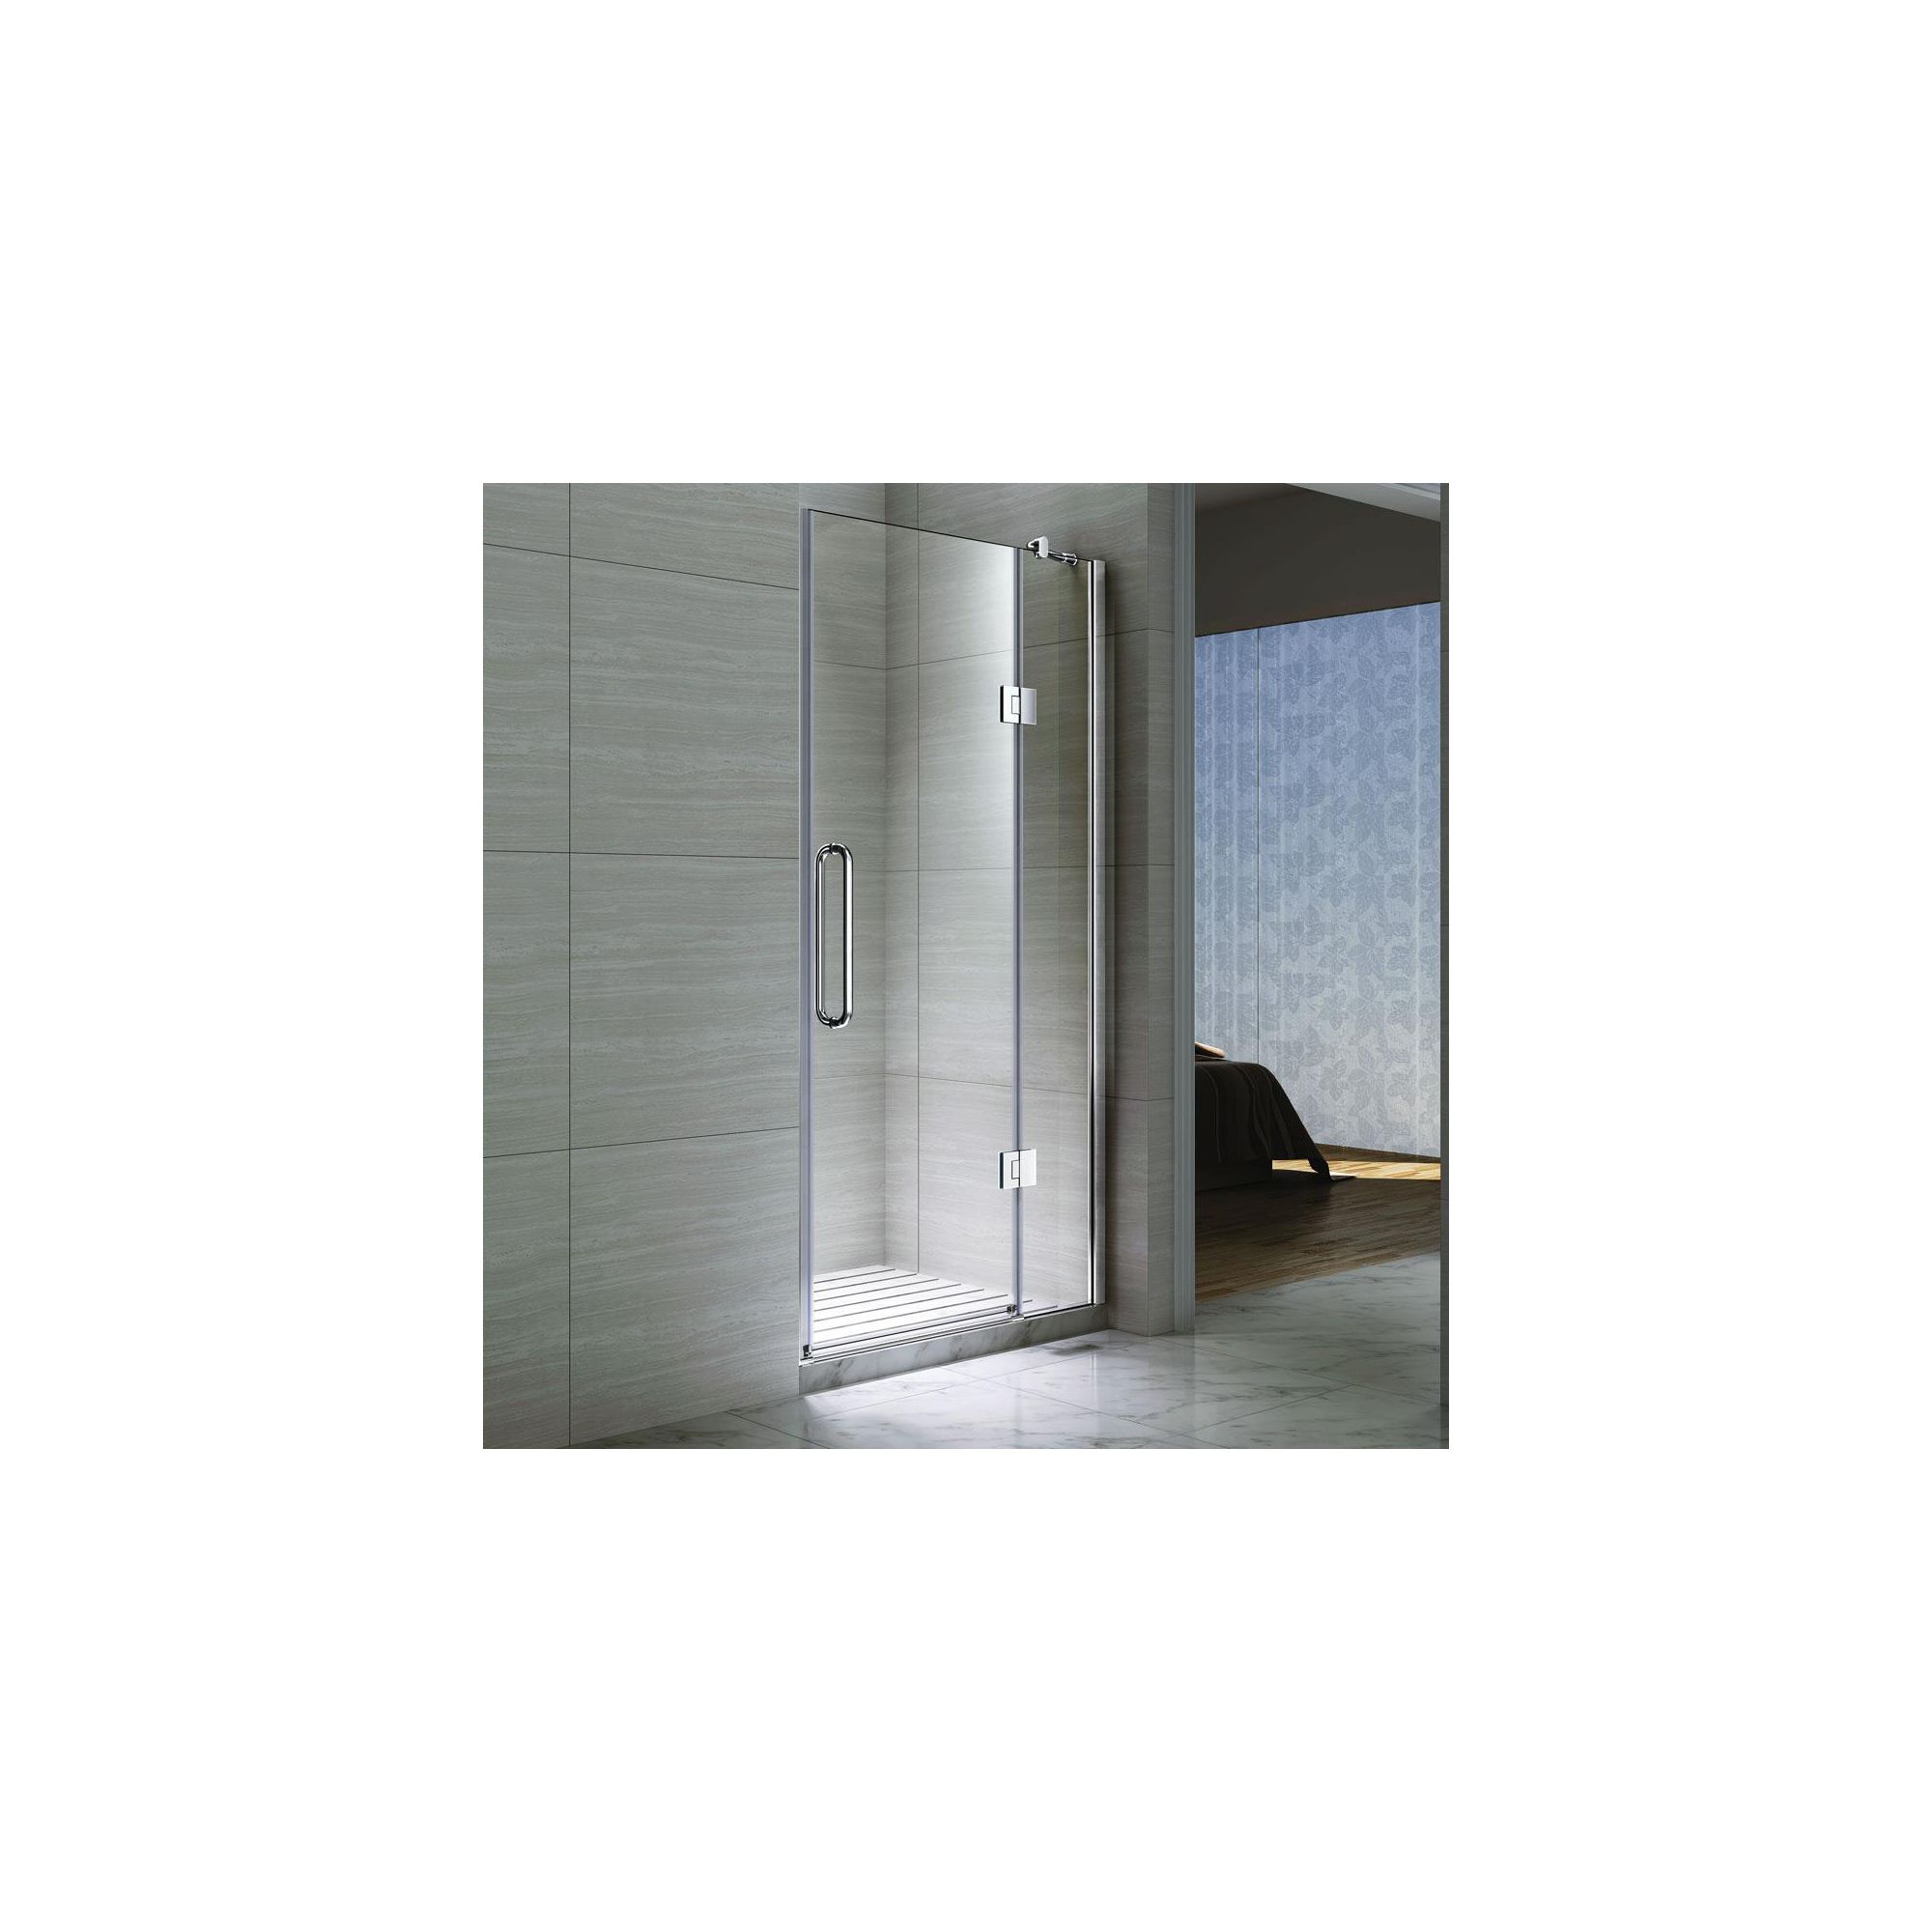 Desire Ten Inline Hinged Shower Door, 1200mm Wide, Semi-Frameless, 10mm Glass at Tesco Direct